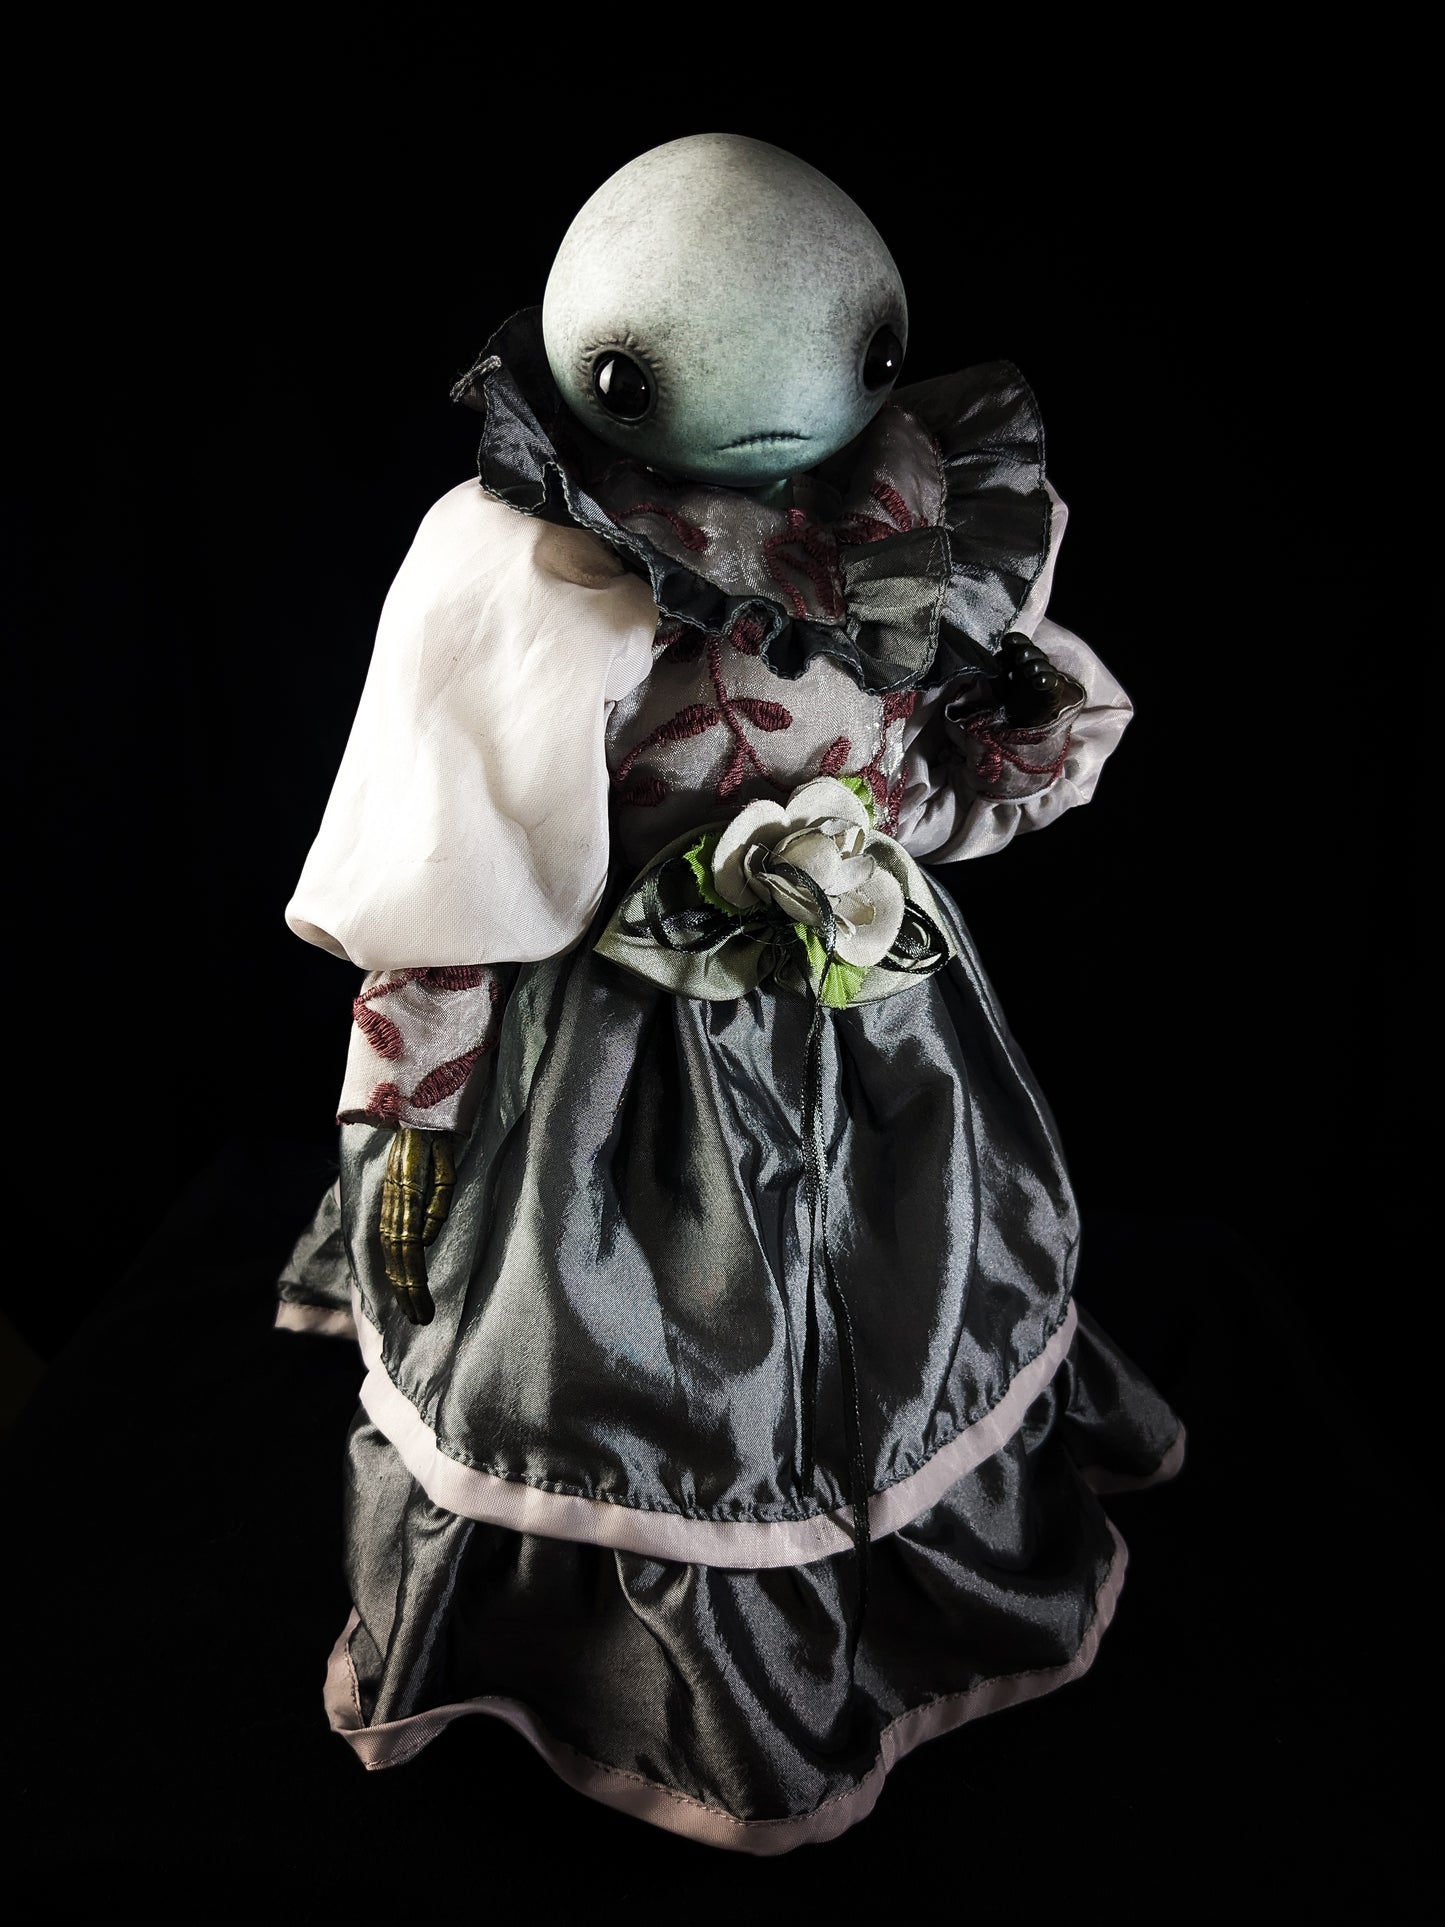 Depression Dolls: TOLKASULK - Handmade Posable Gothic Art Doll for Enigmatic Souls